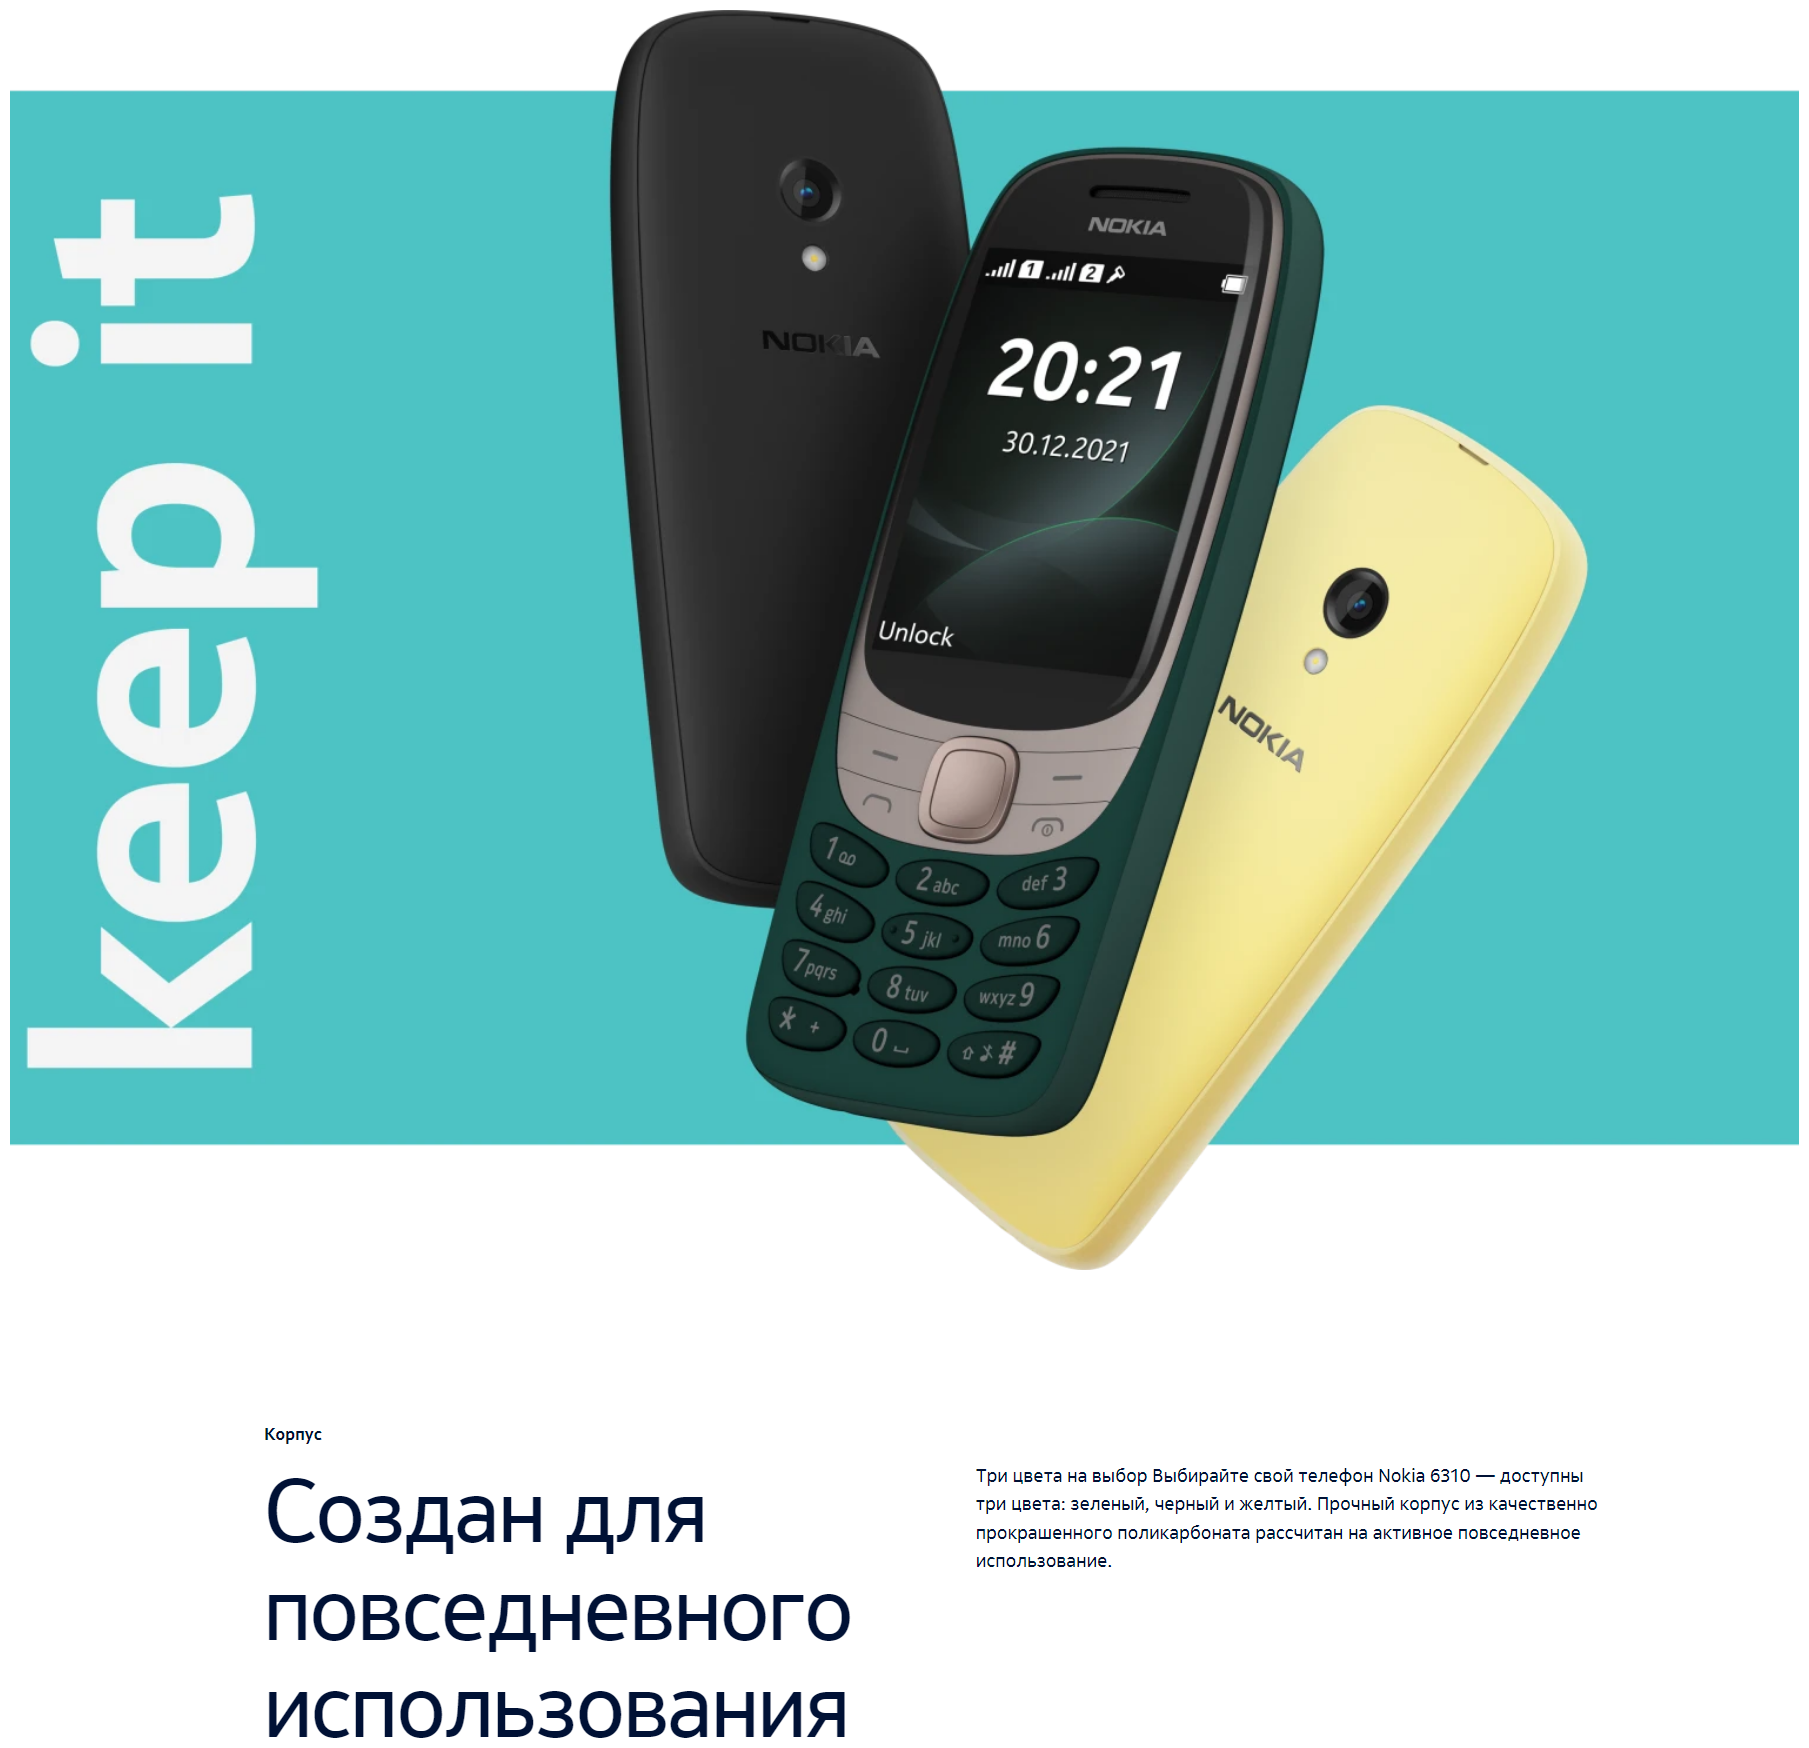 Nokia - фото №20